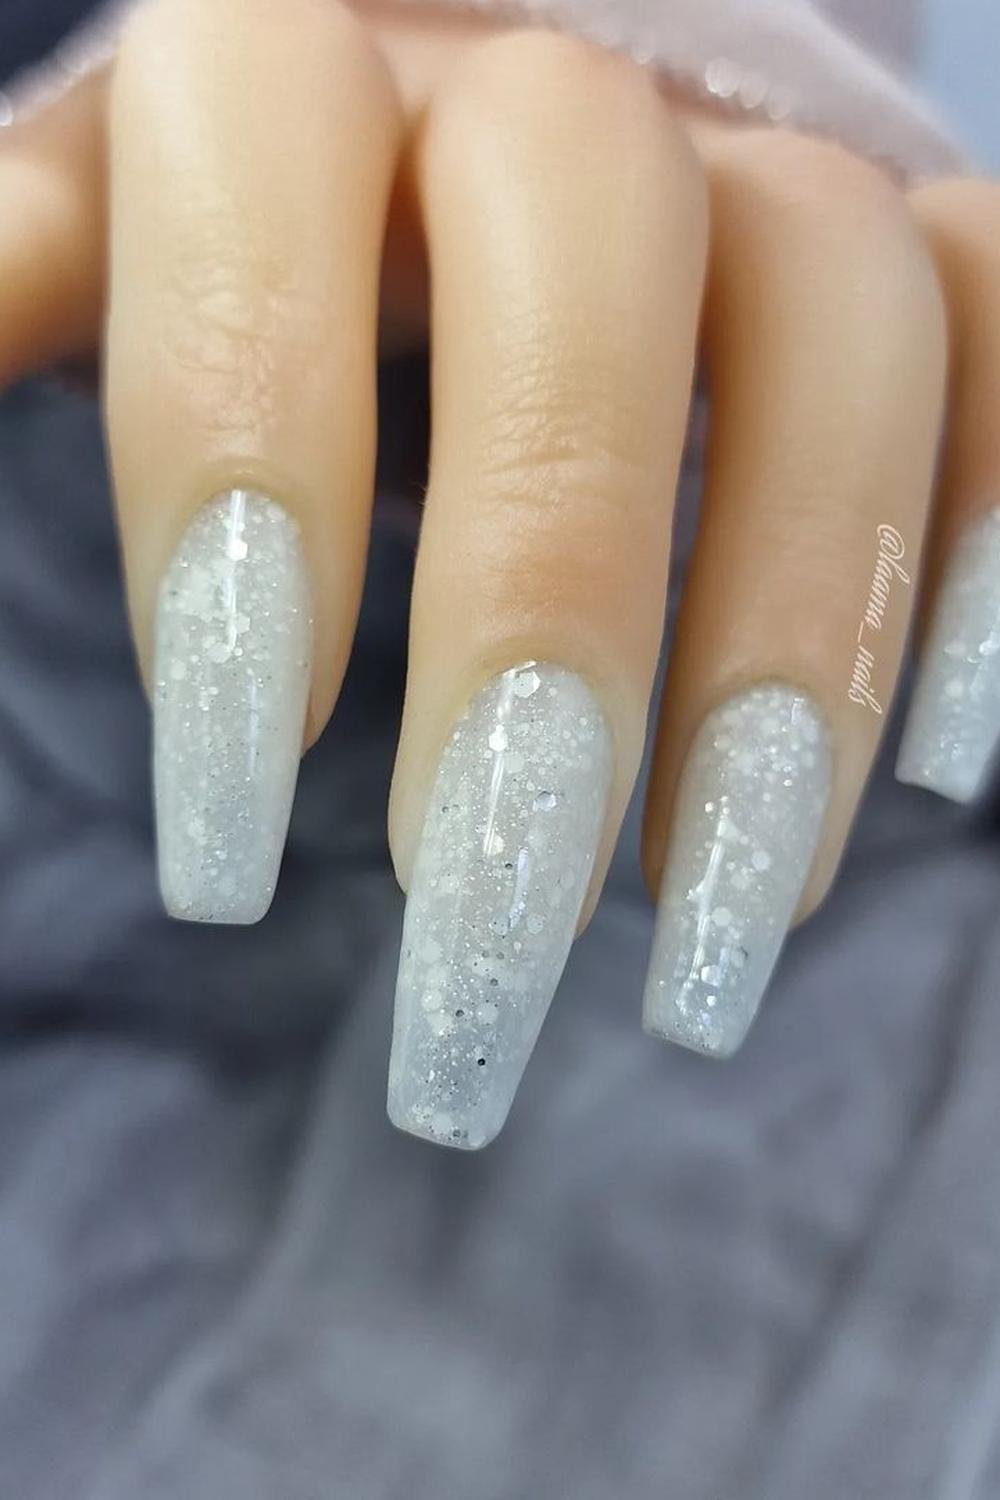 6 - Picture of White Glitter Nails